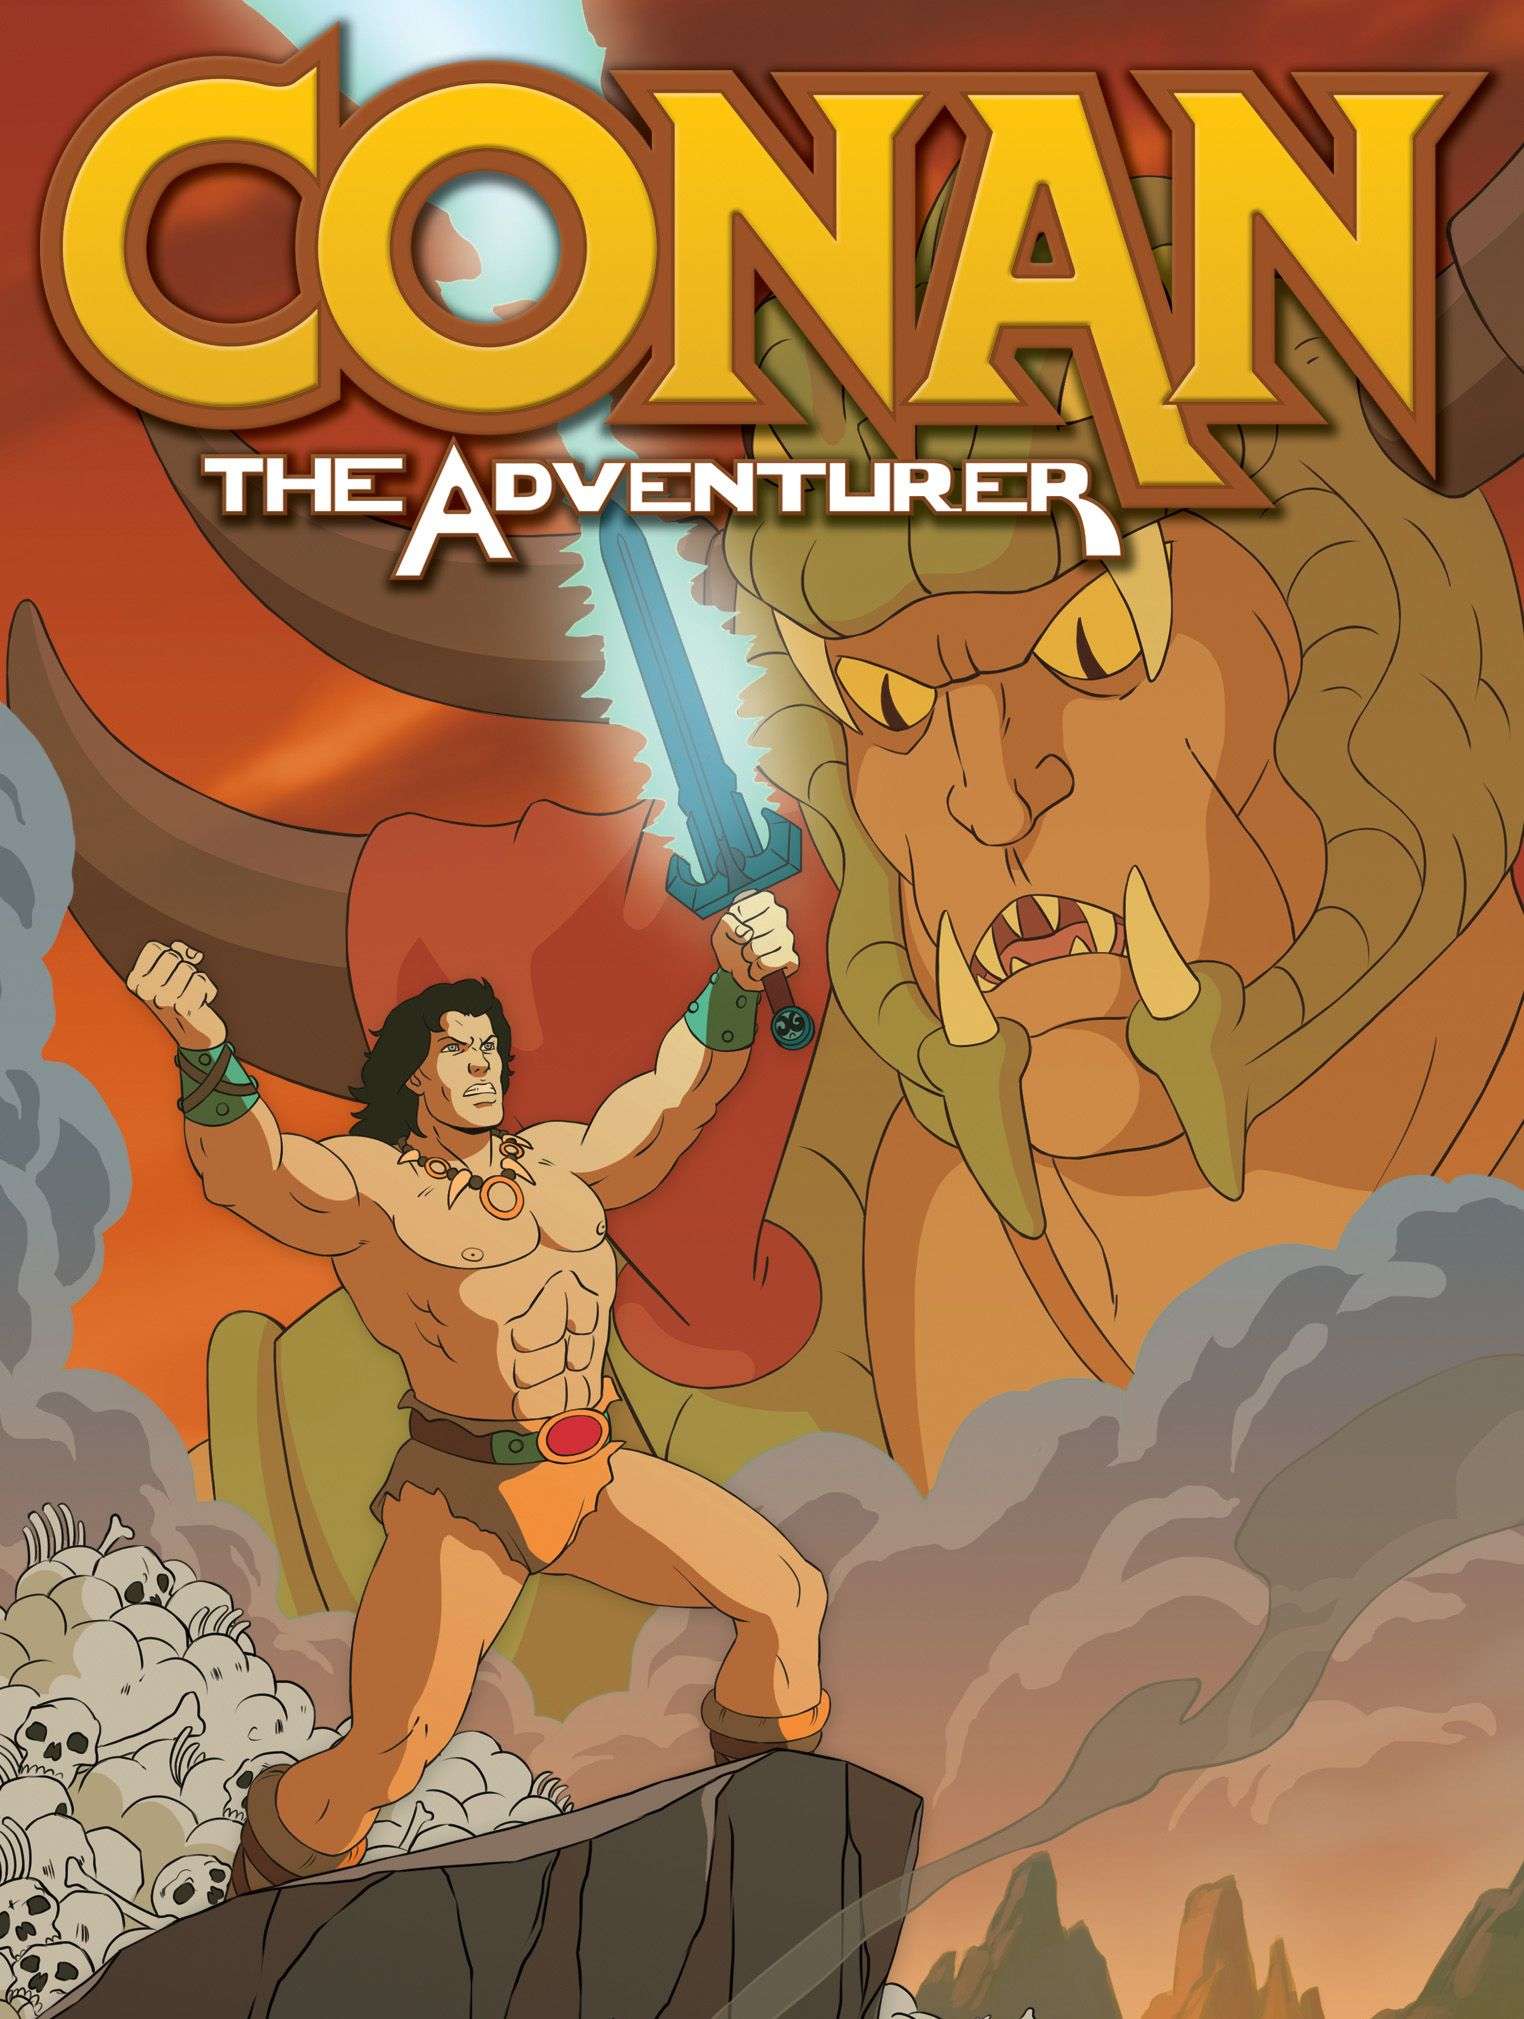 Conan the Adventurer (1992 TV series)